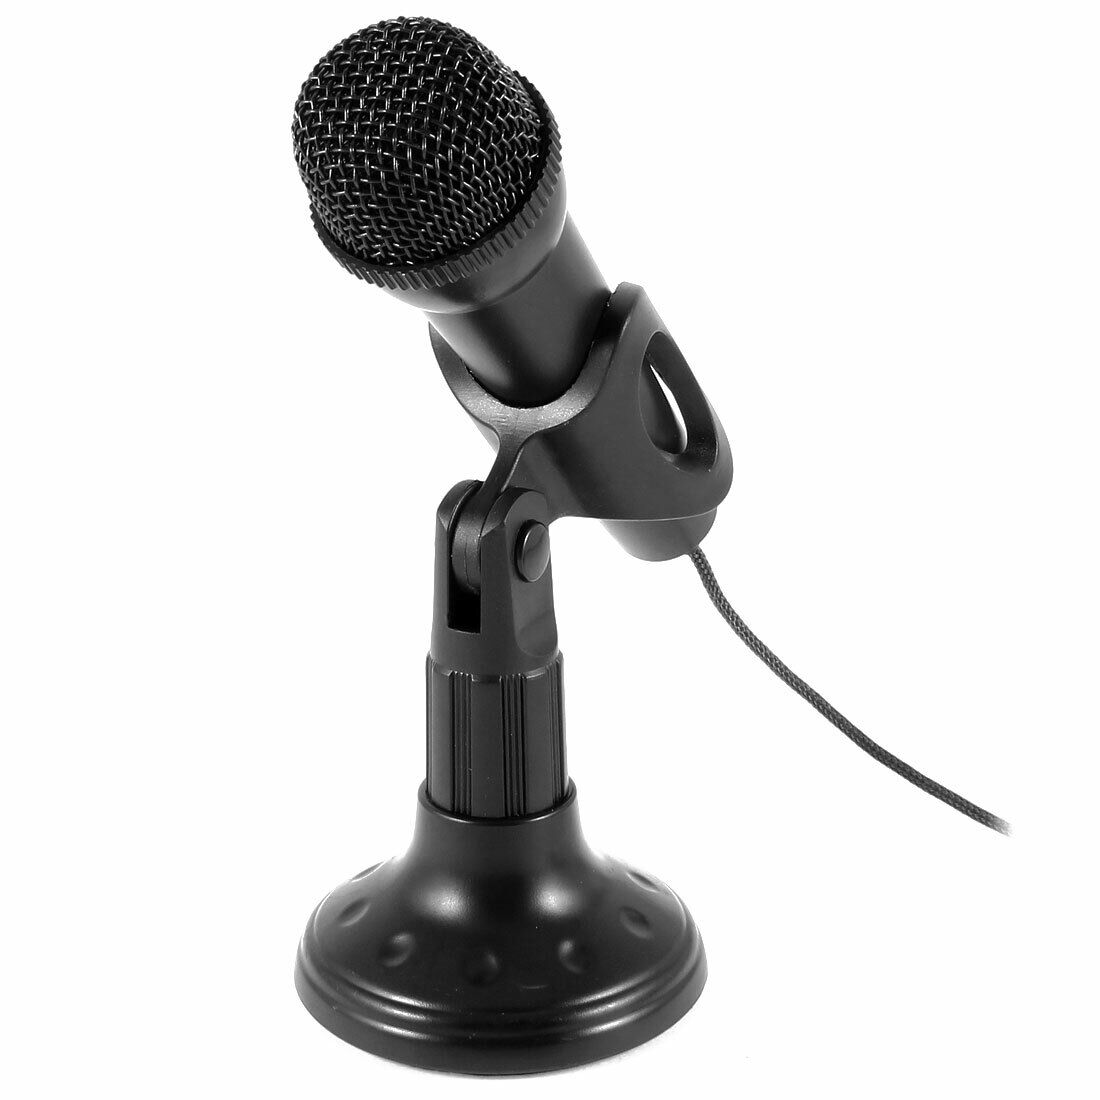 Mini 3.5mm Stereo Studio Speech Microphone Mic w Stand Mount Black for PC Laptop